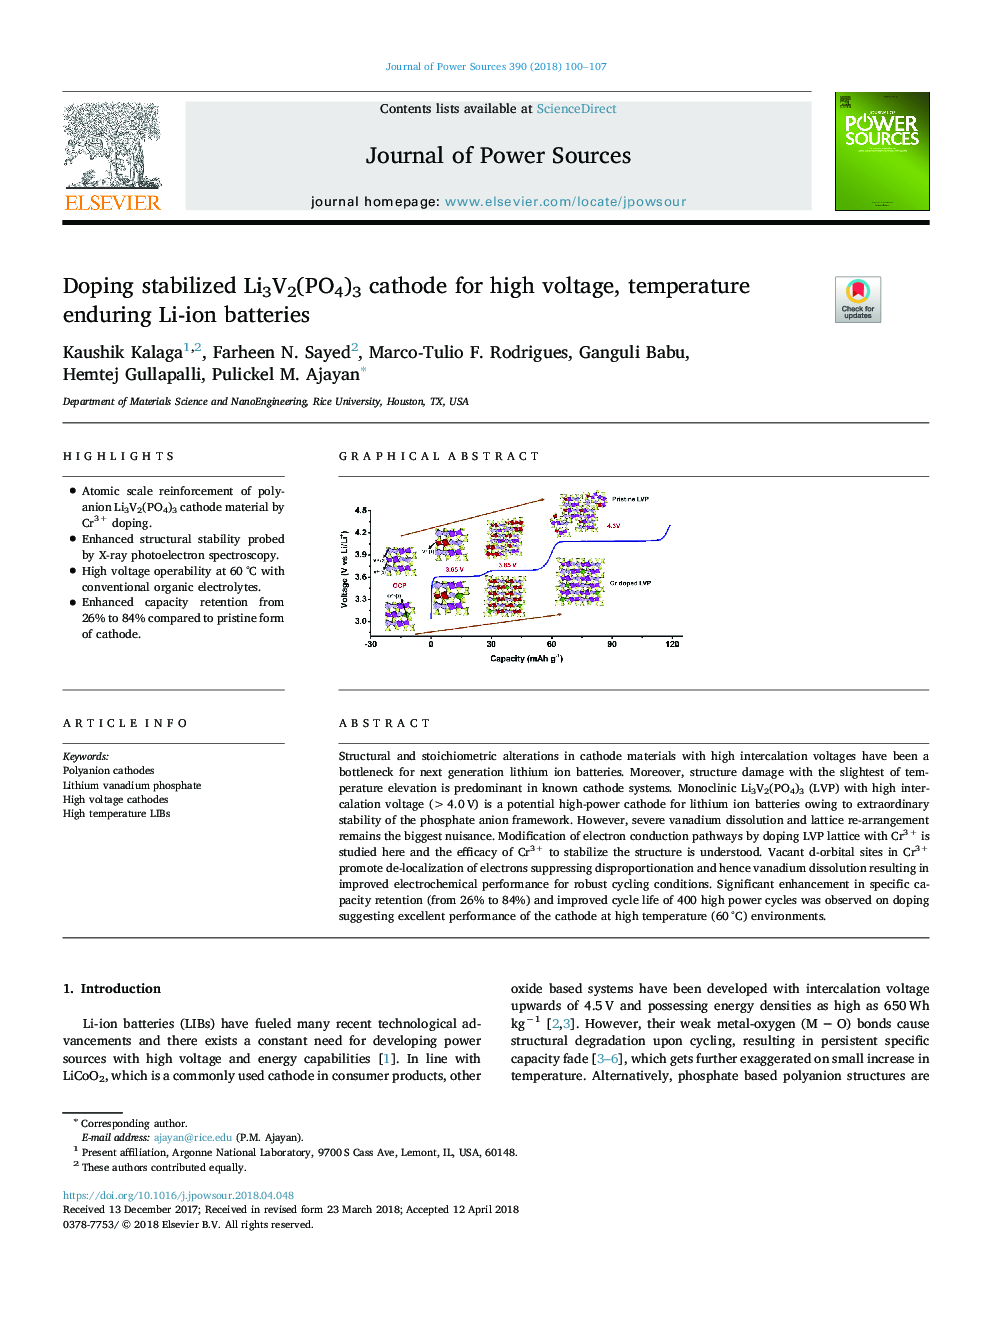 Doping stabilized Li3V2(PO4)3 cathode for high voltage, temperature enduring Li-ion batteries